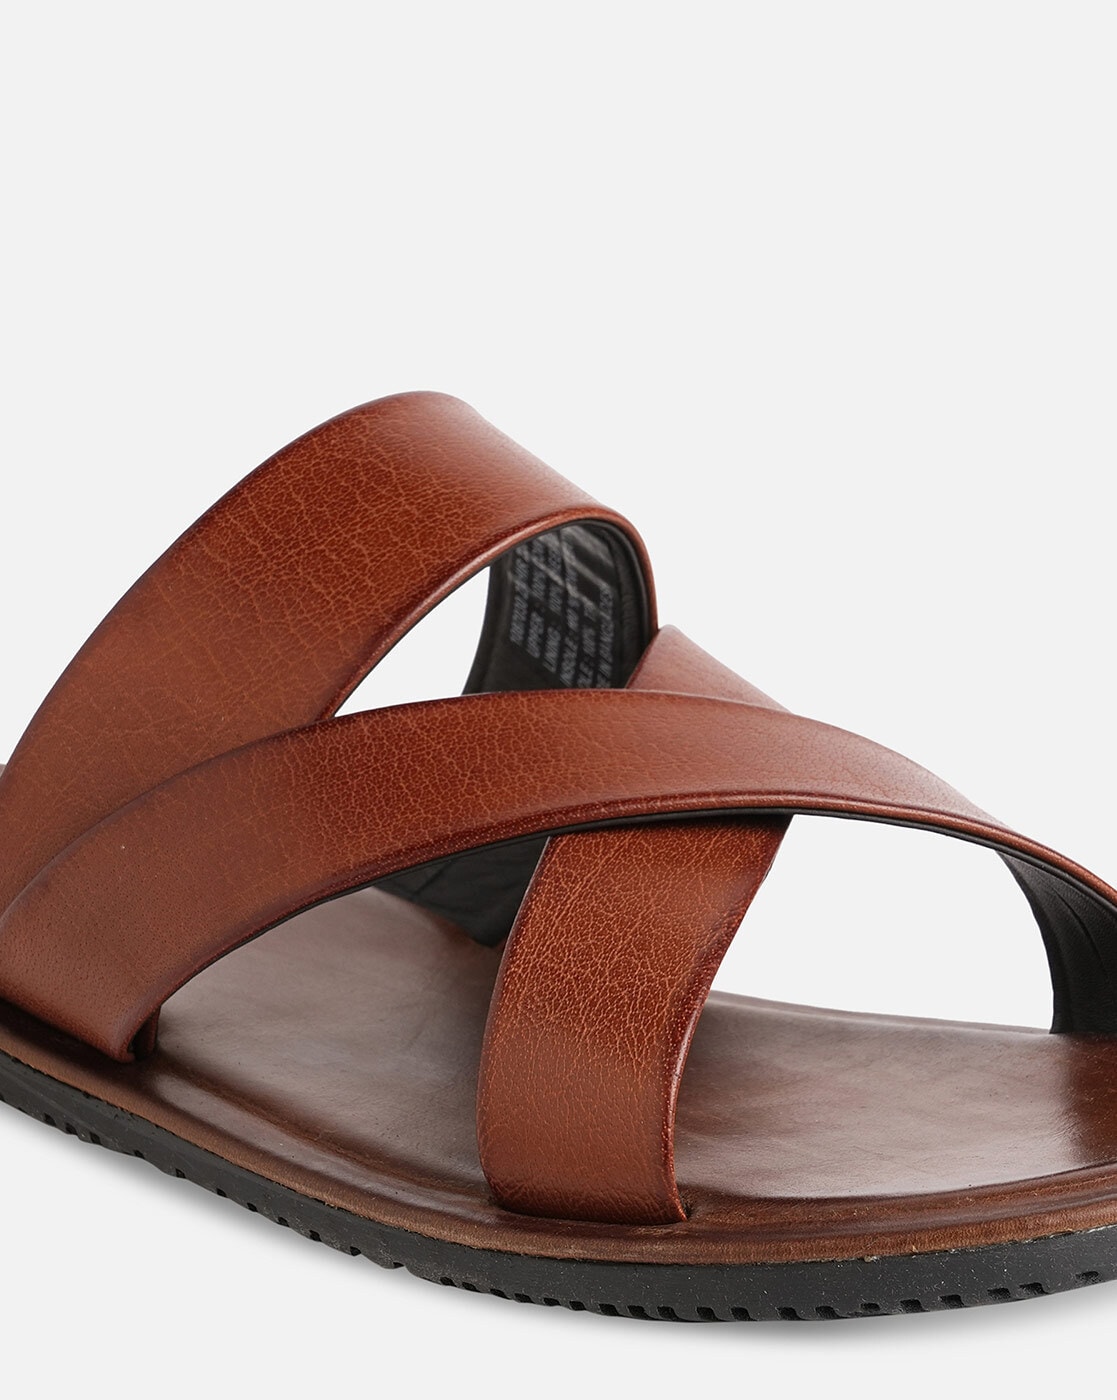 Brown Comfort Cross Strap Leather Sandals leather shoes for men | Rapawalk